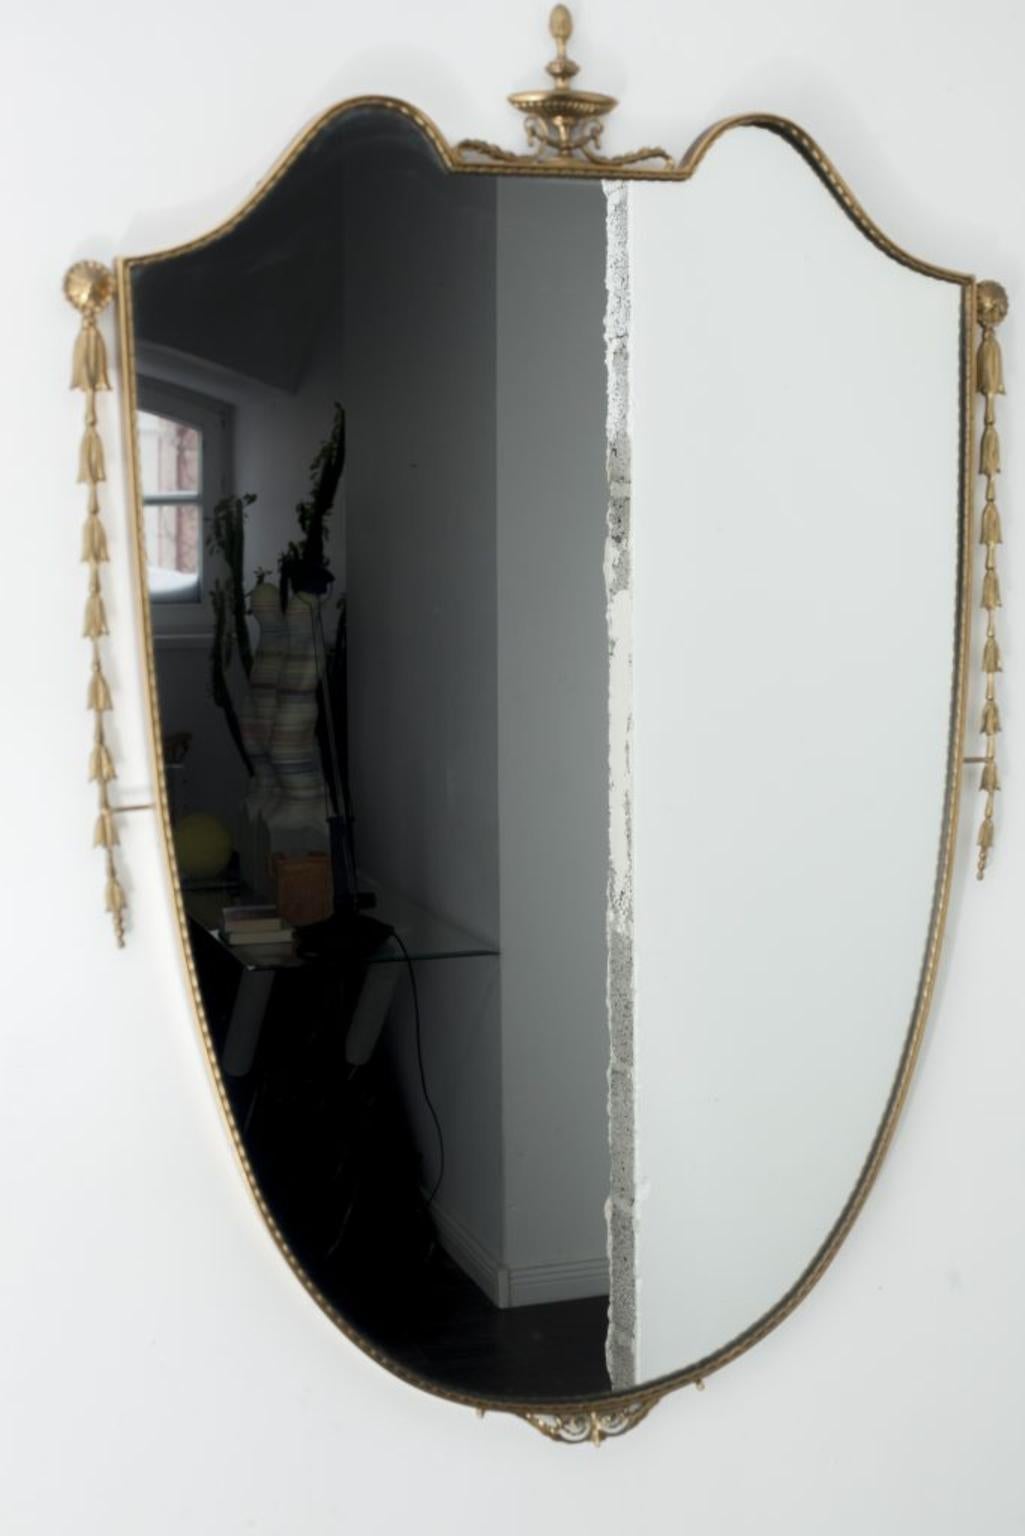 Metalwork Designer Gio Ponti Style Antique Italian Mirror